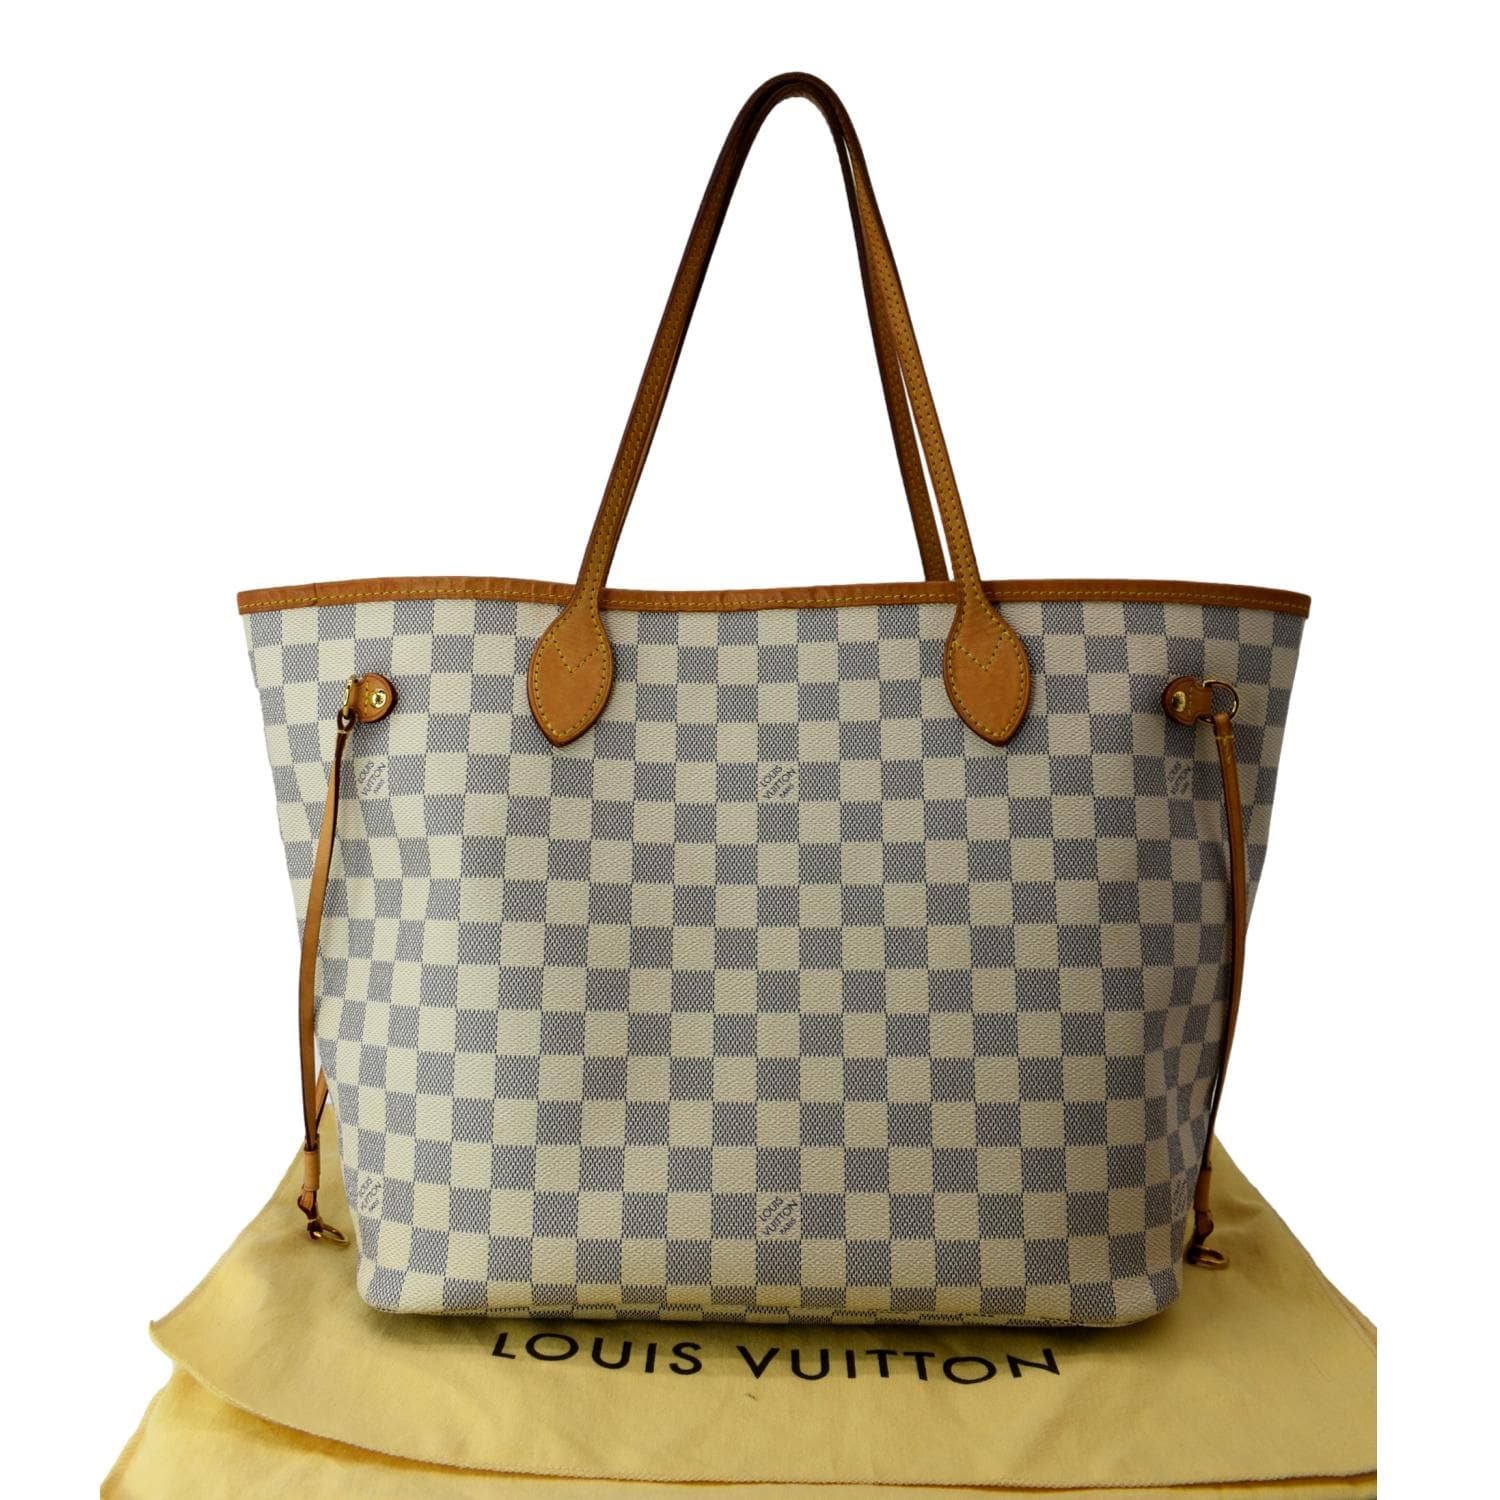 Louis Vuitton Neverfull Full Collection! Monogram (pivoine), Damier Azur…   Vintage louis vuitton handbags, Louis vuitton handbags neverfull, Louis  vuitton handbags